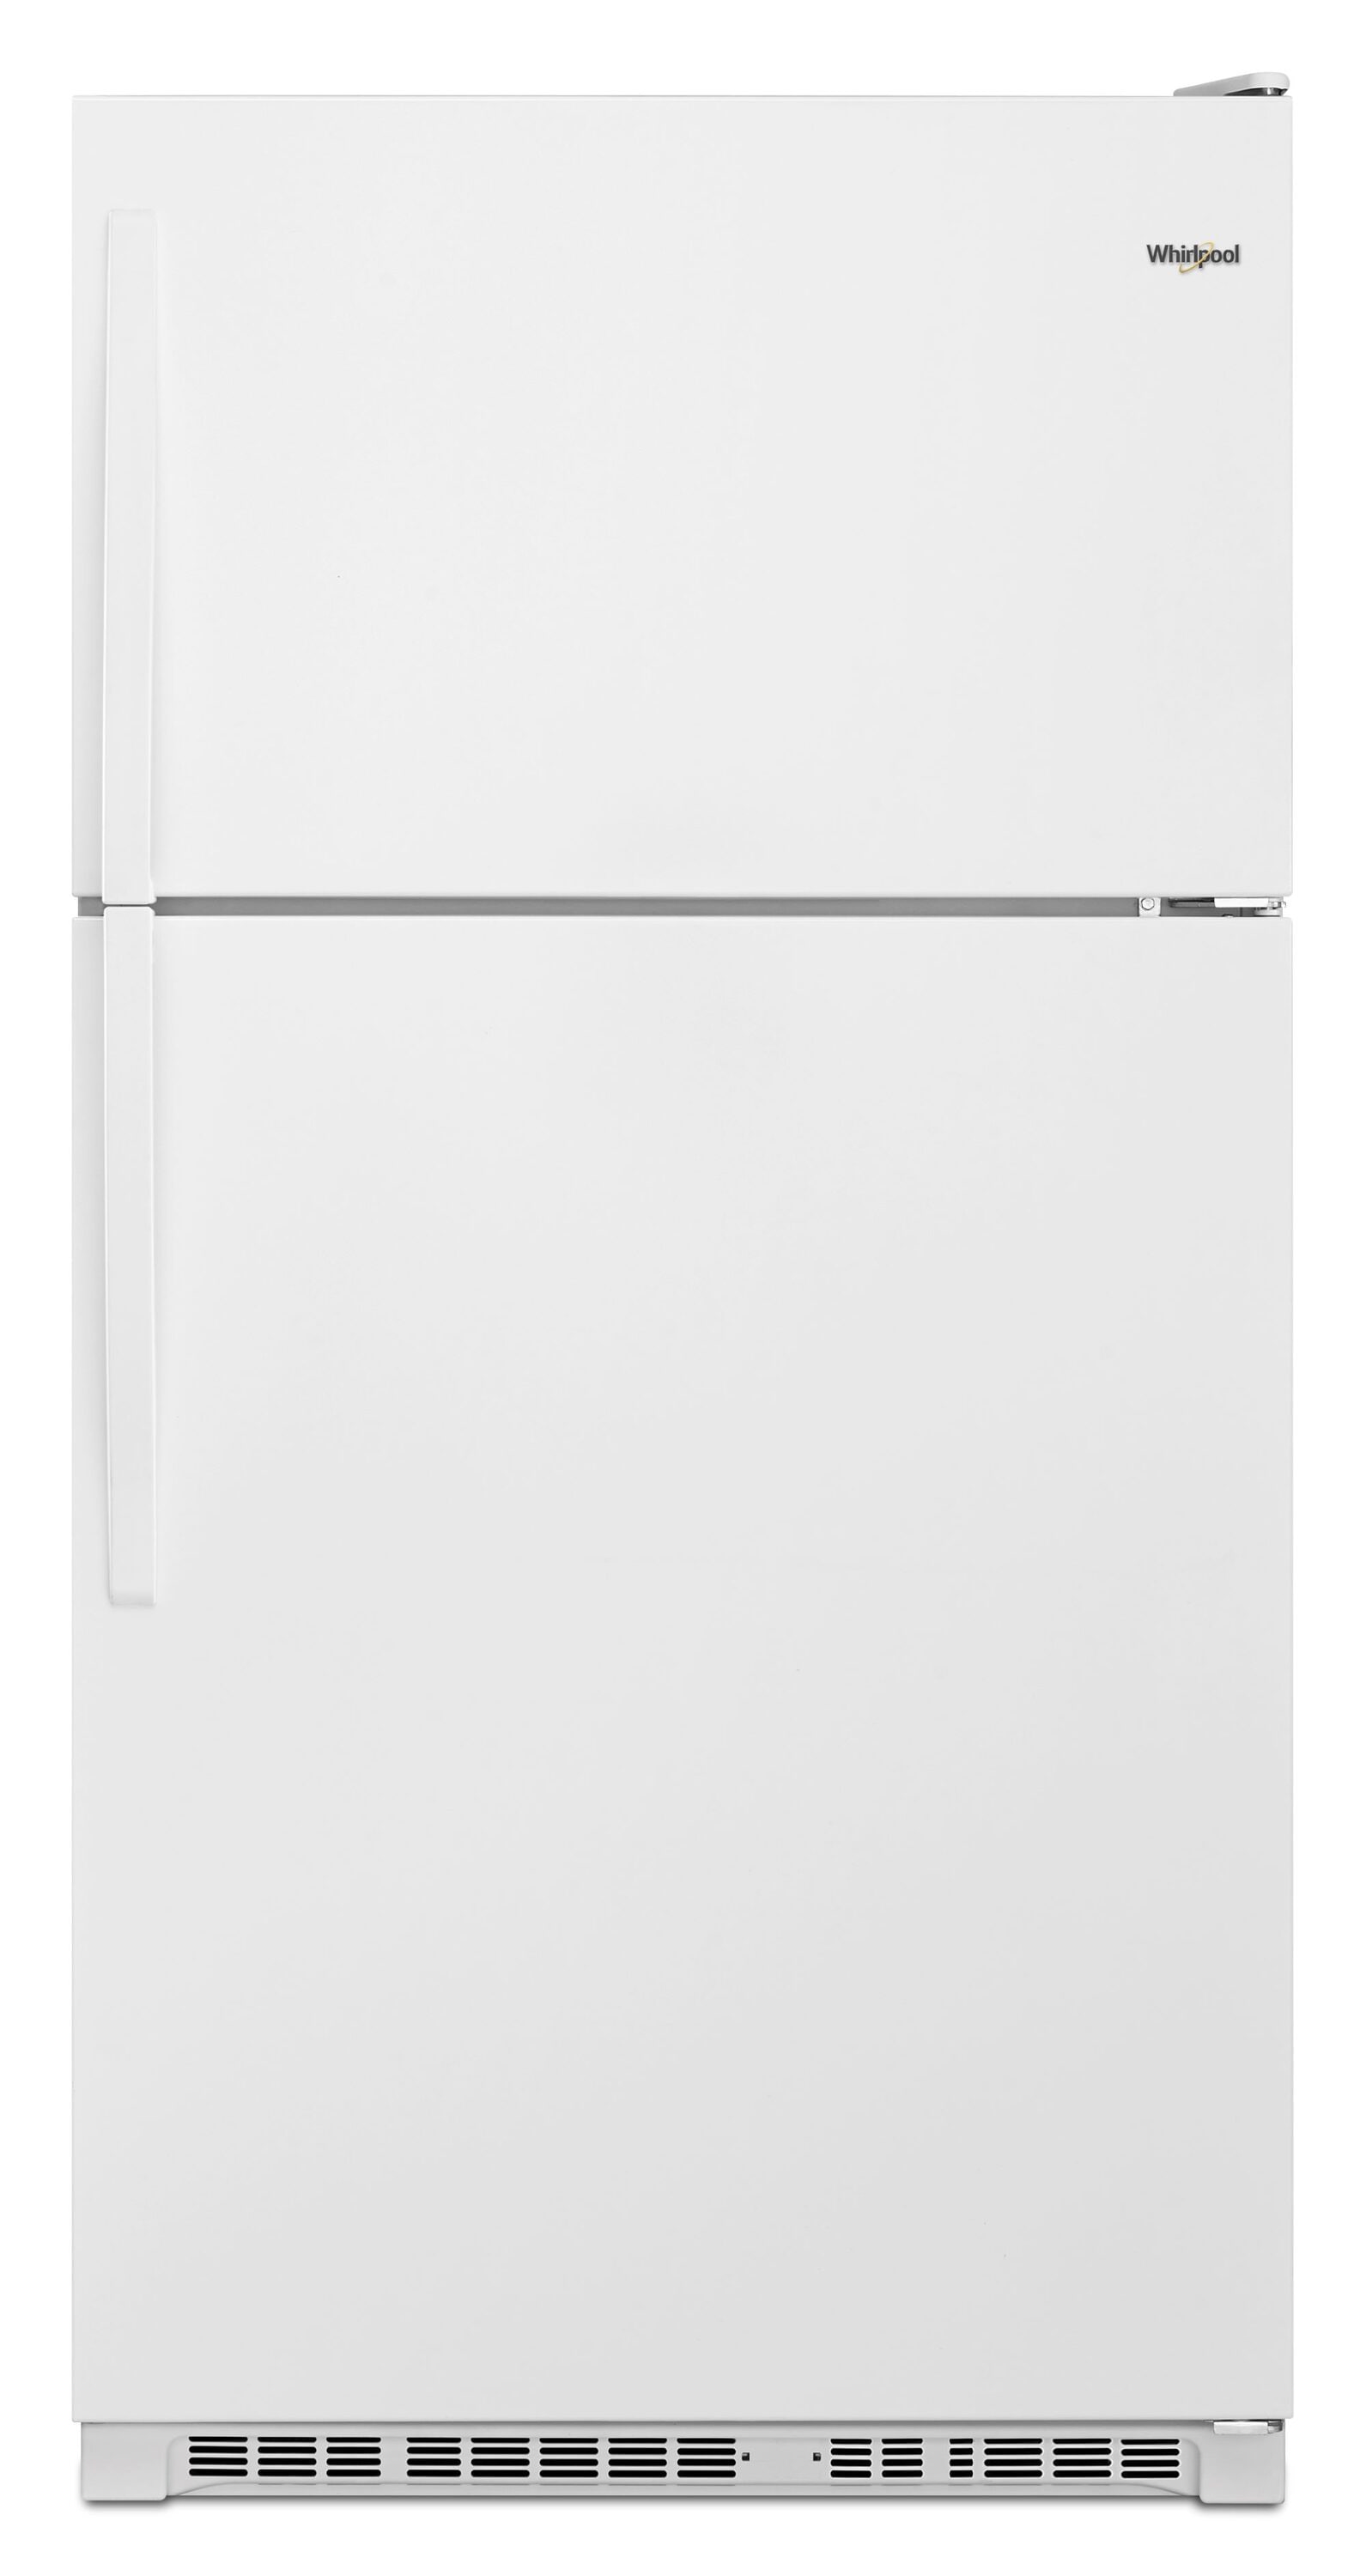 r/drawing: reddit's refrigerator door